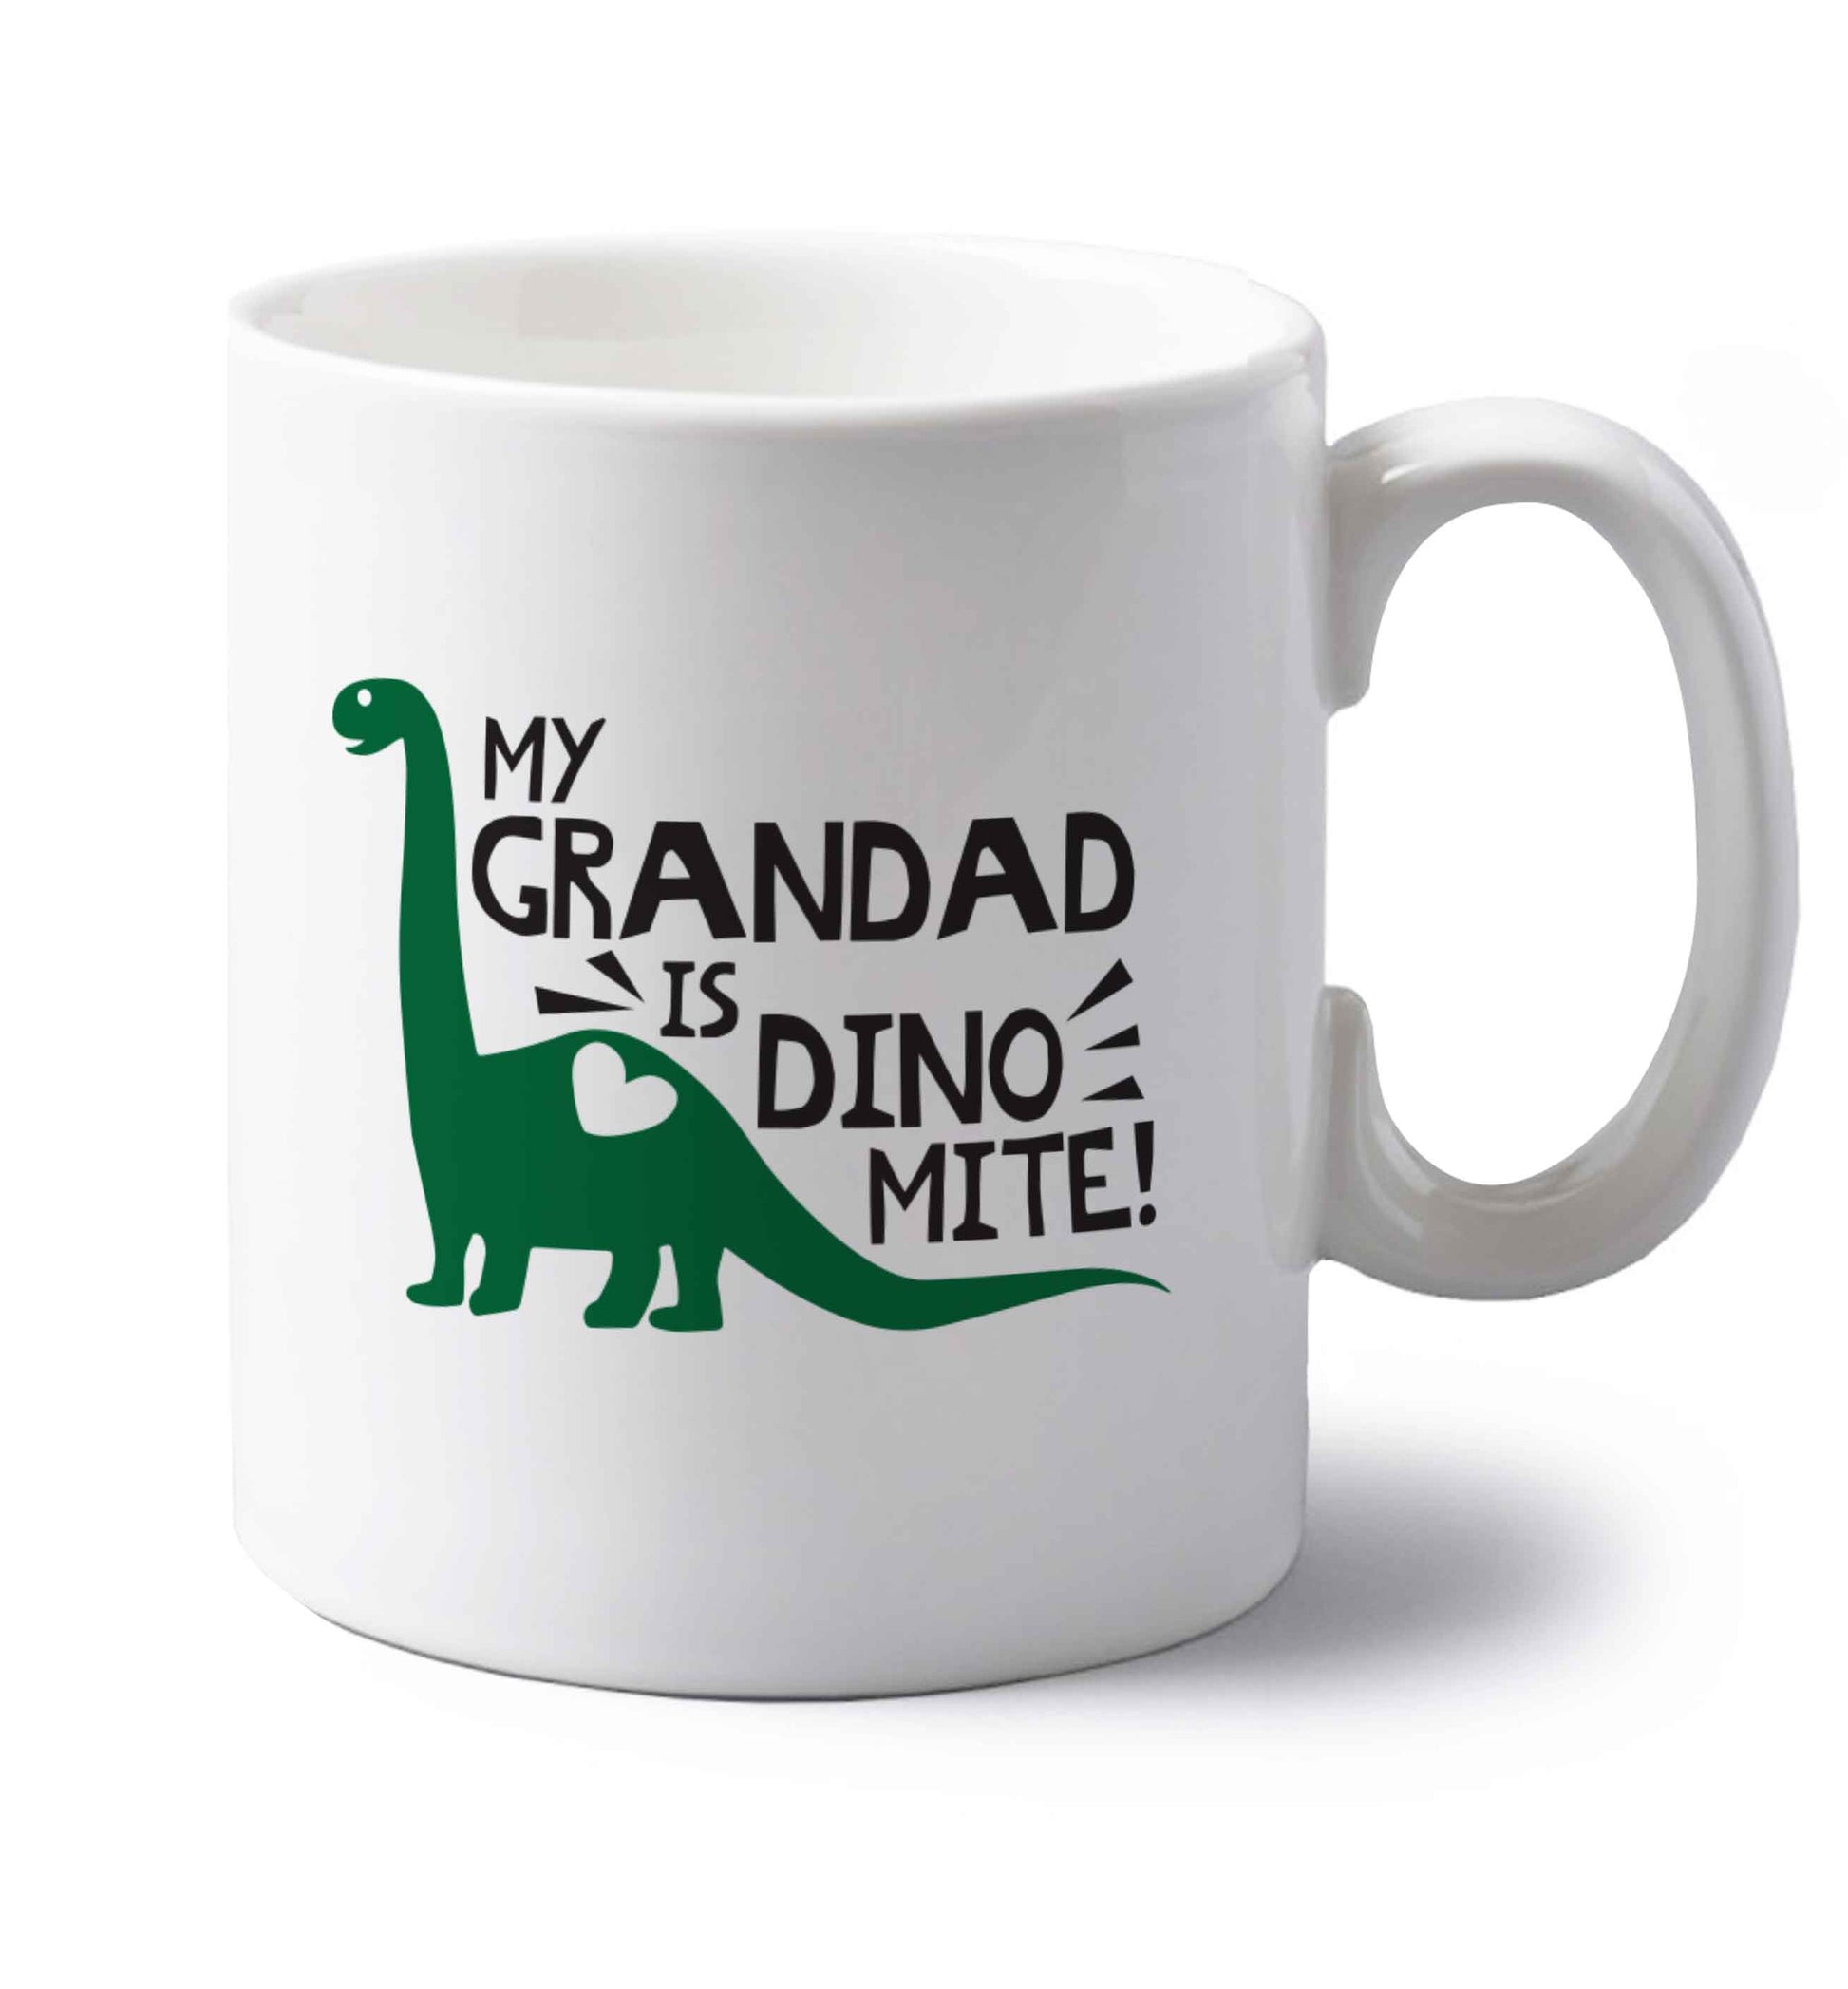 My grandad is dinomite! left handed white ceramic mug 